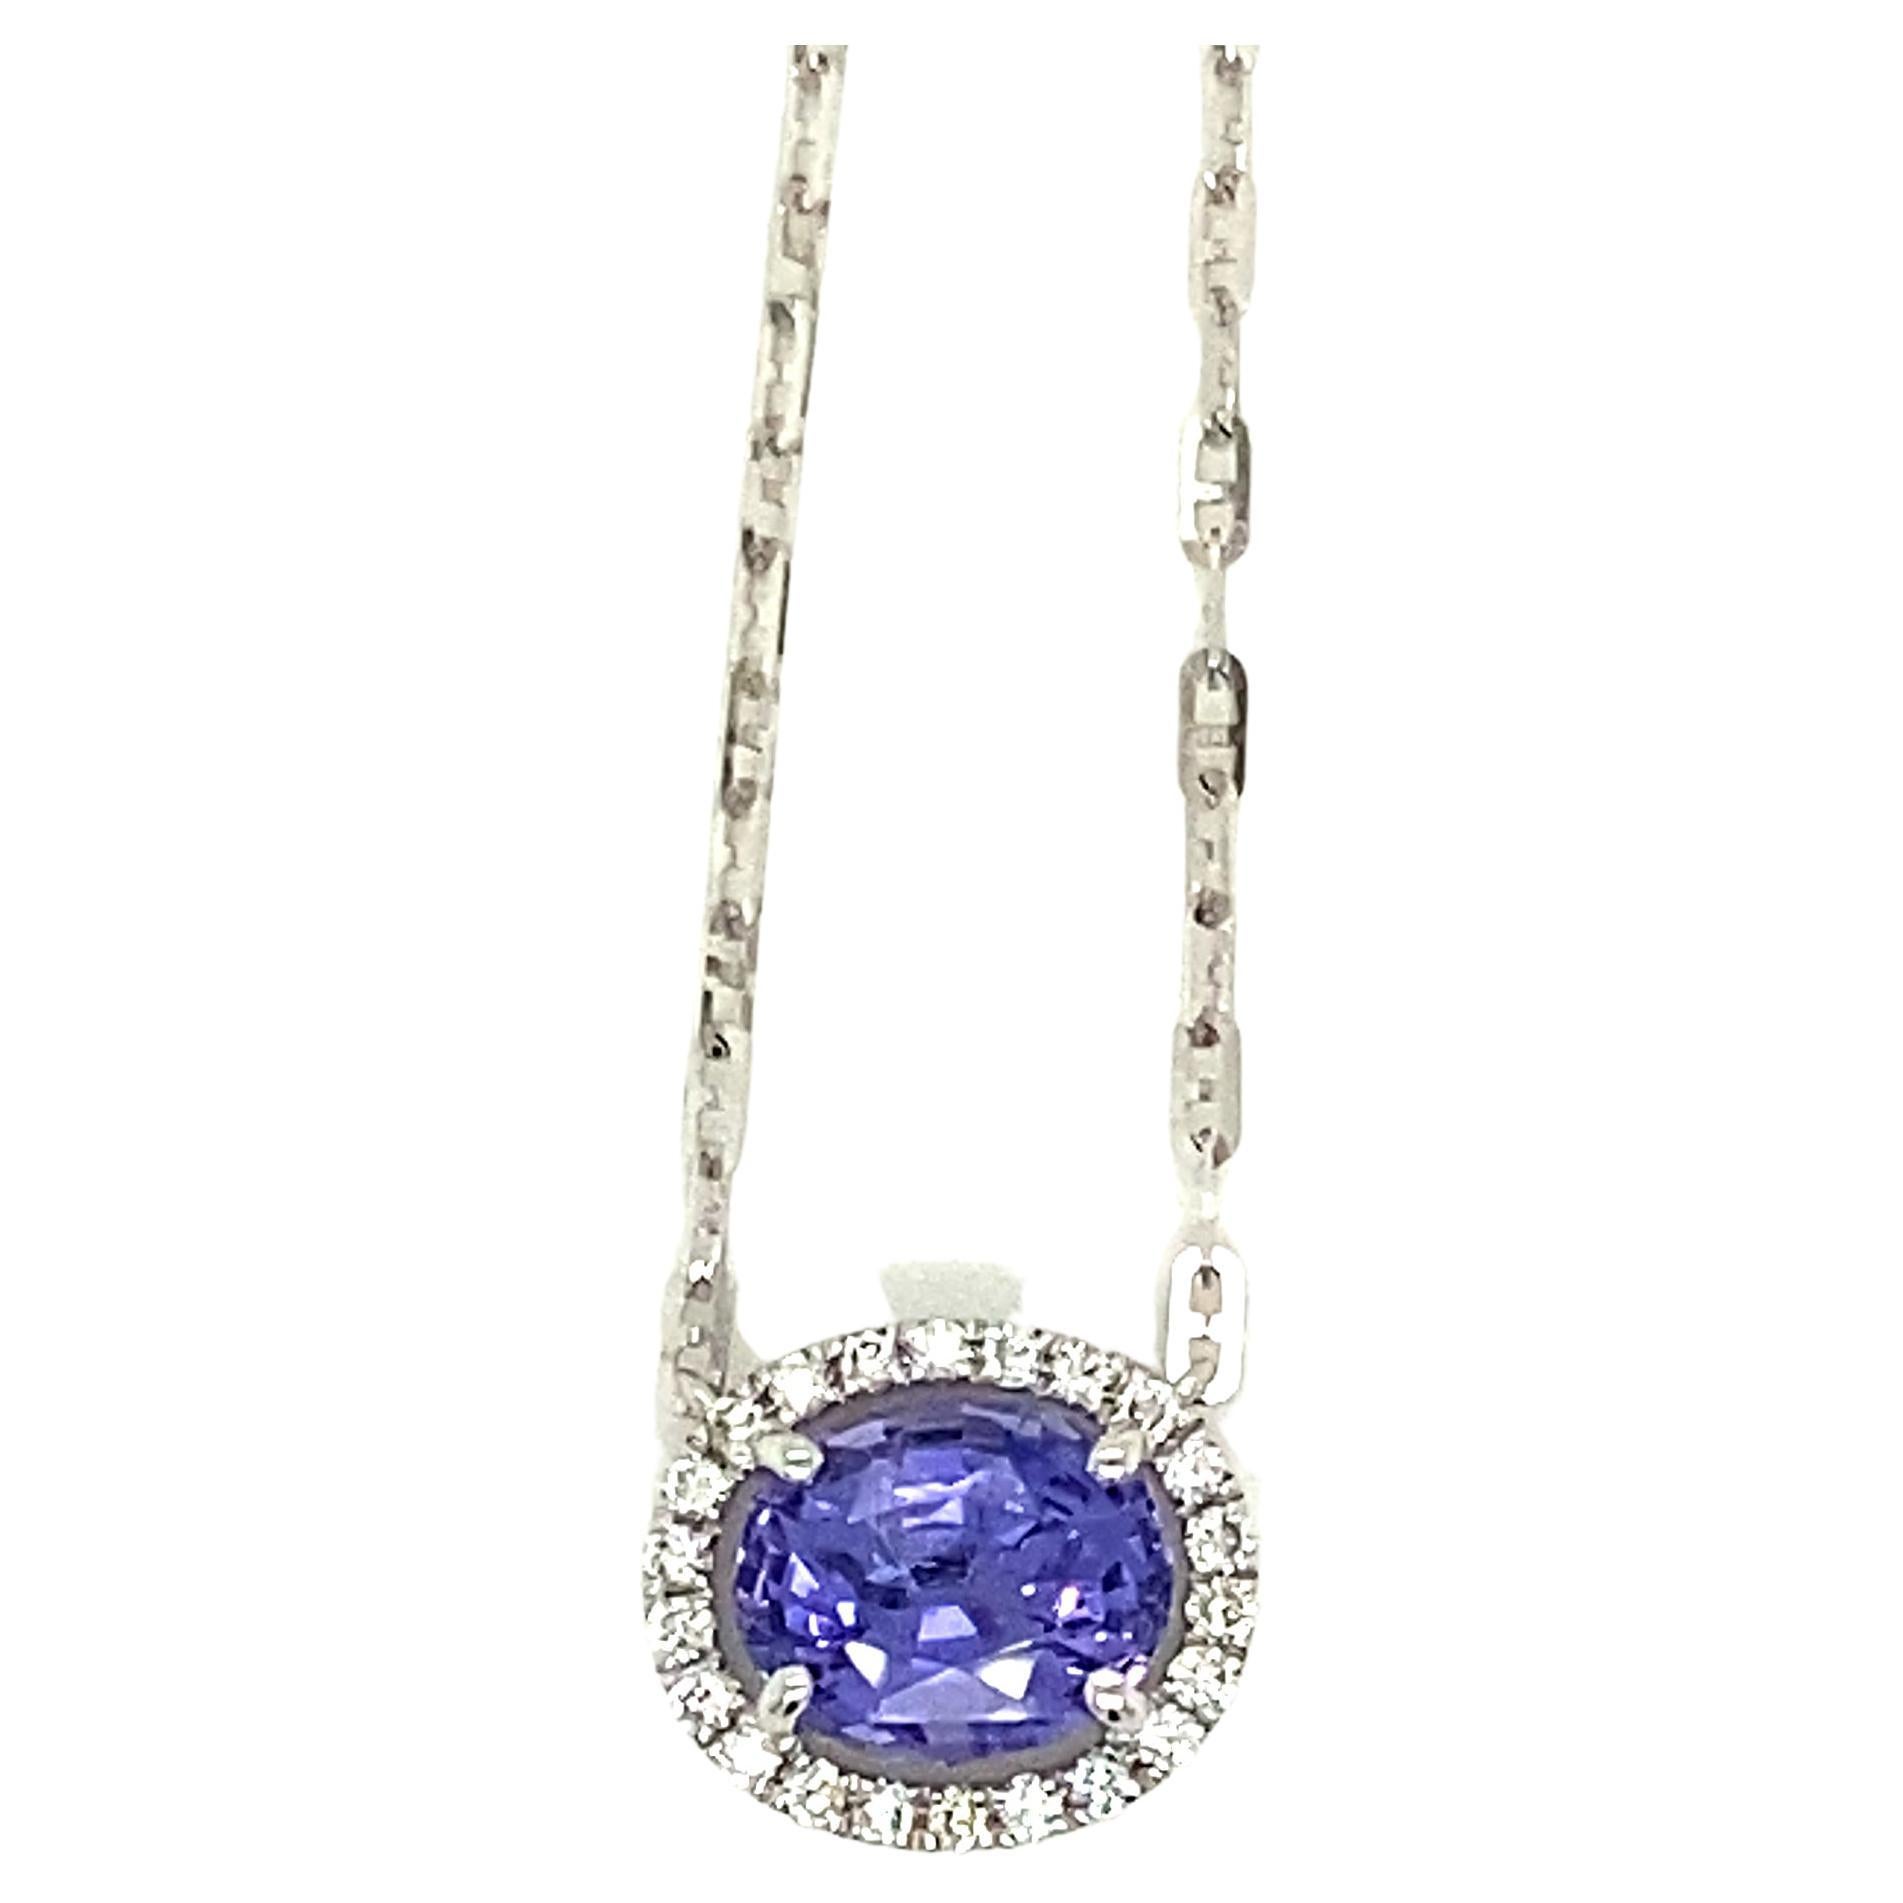 1.77Carat Purple Sapphire and Diamond Pendant Necklace